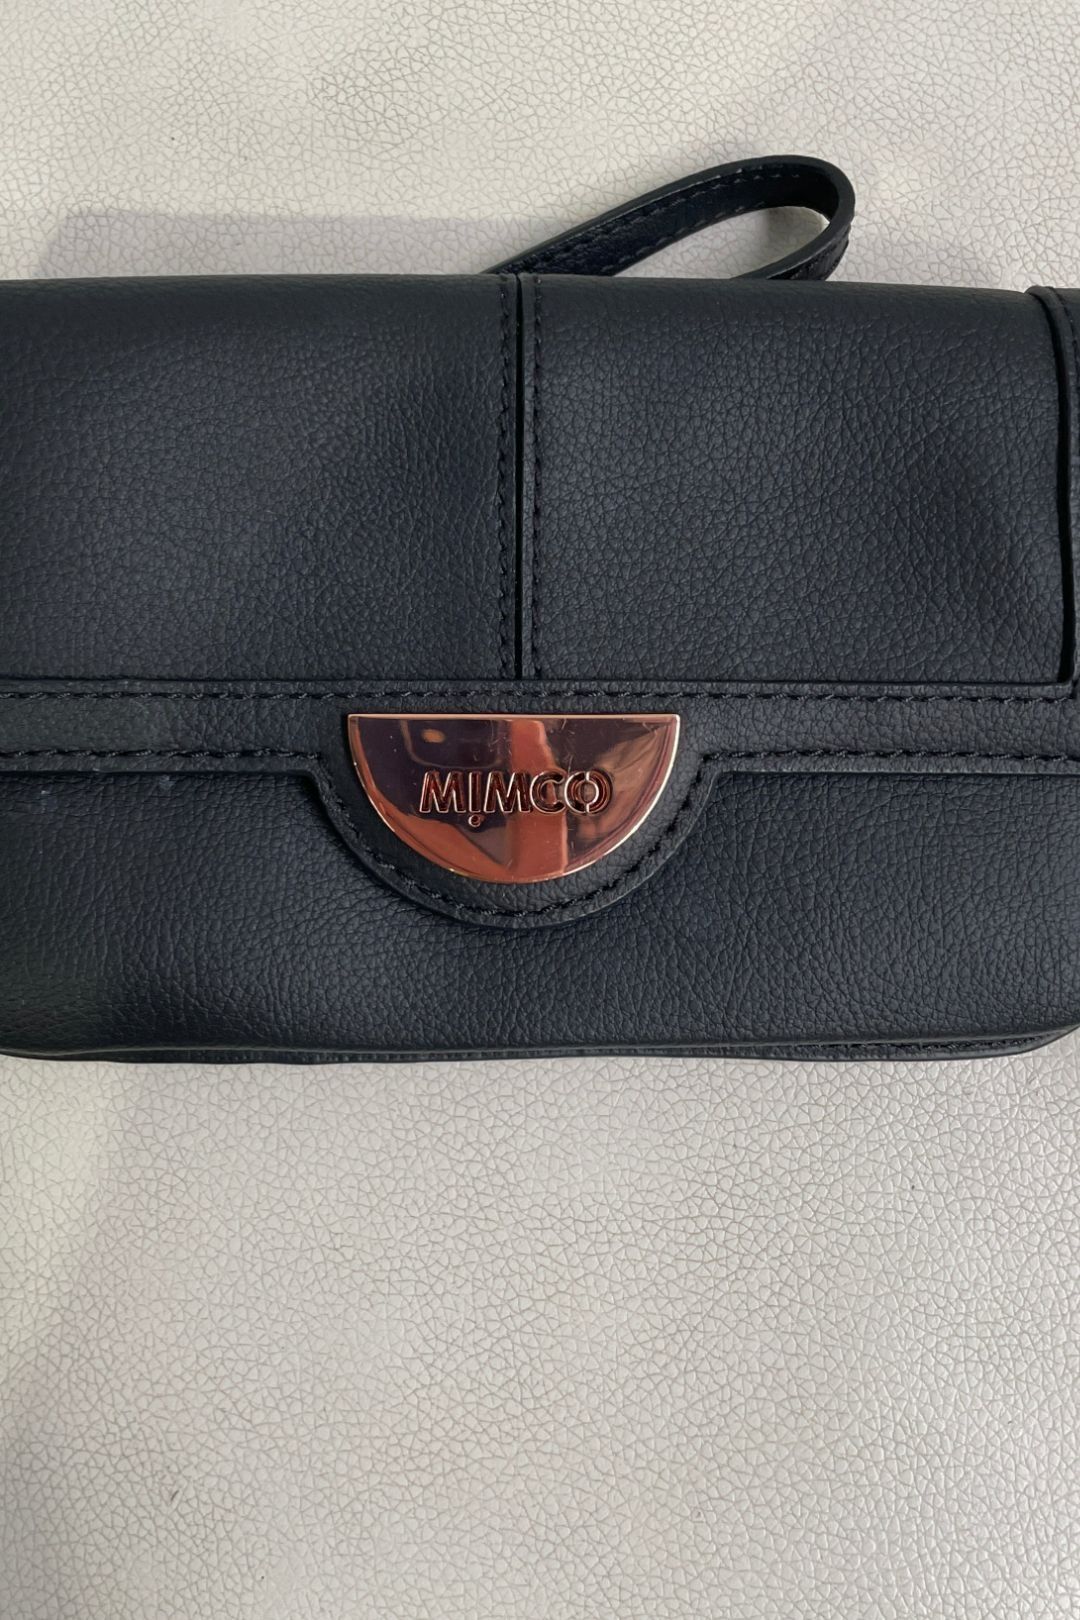 Mimco Black Leather Tech Wallet